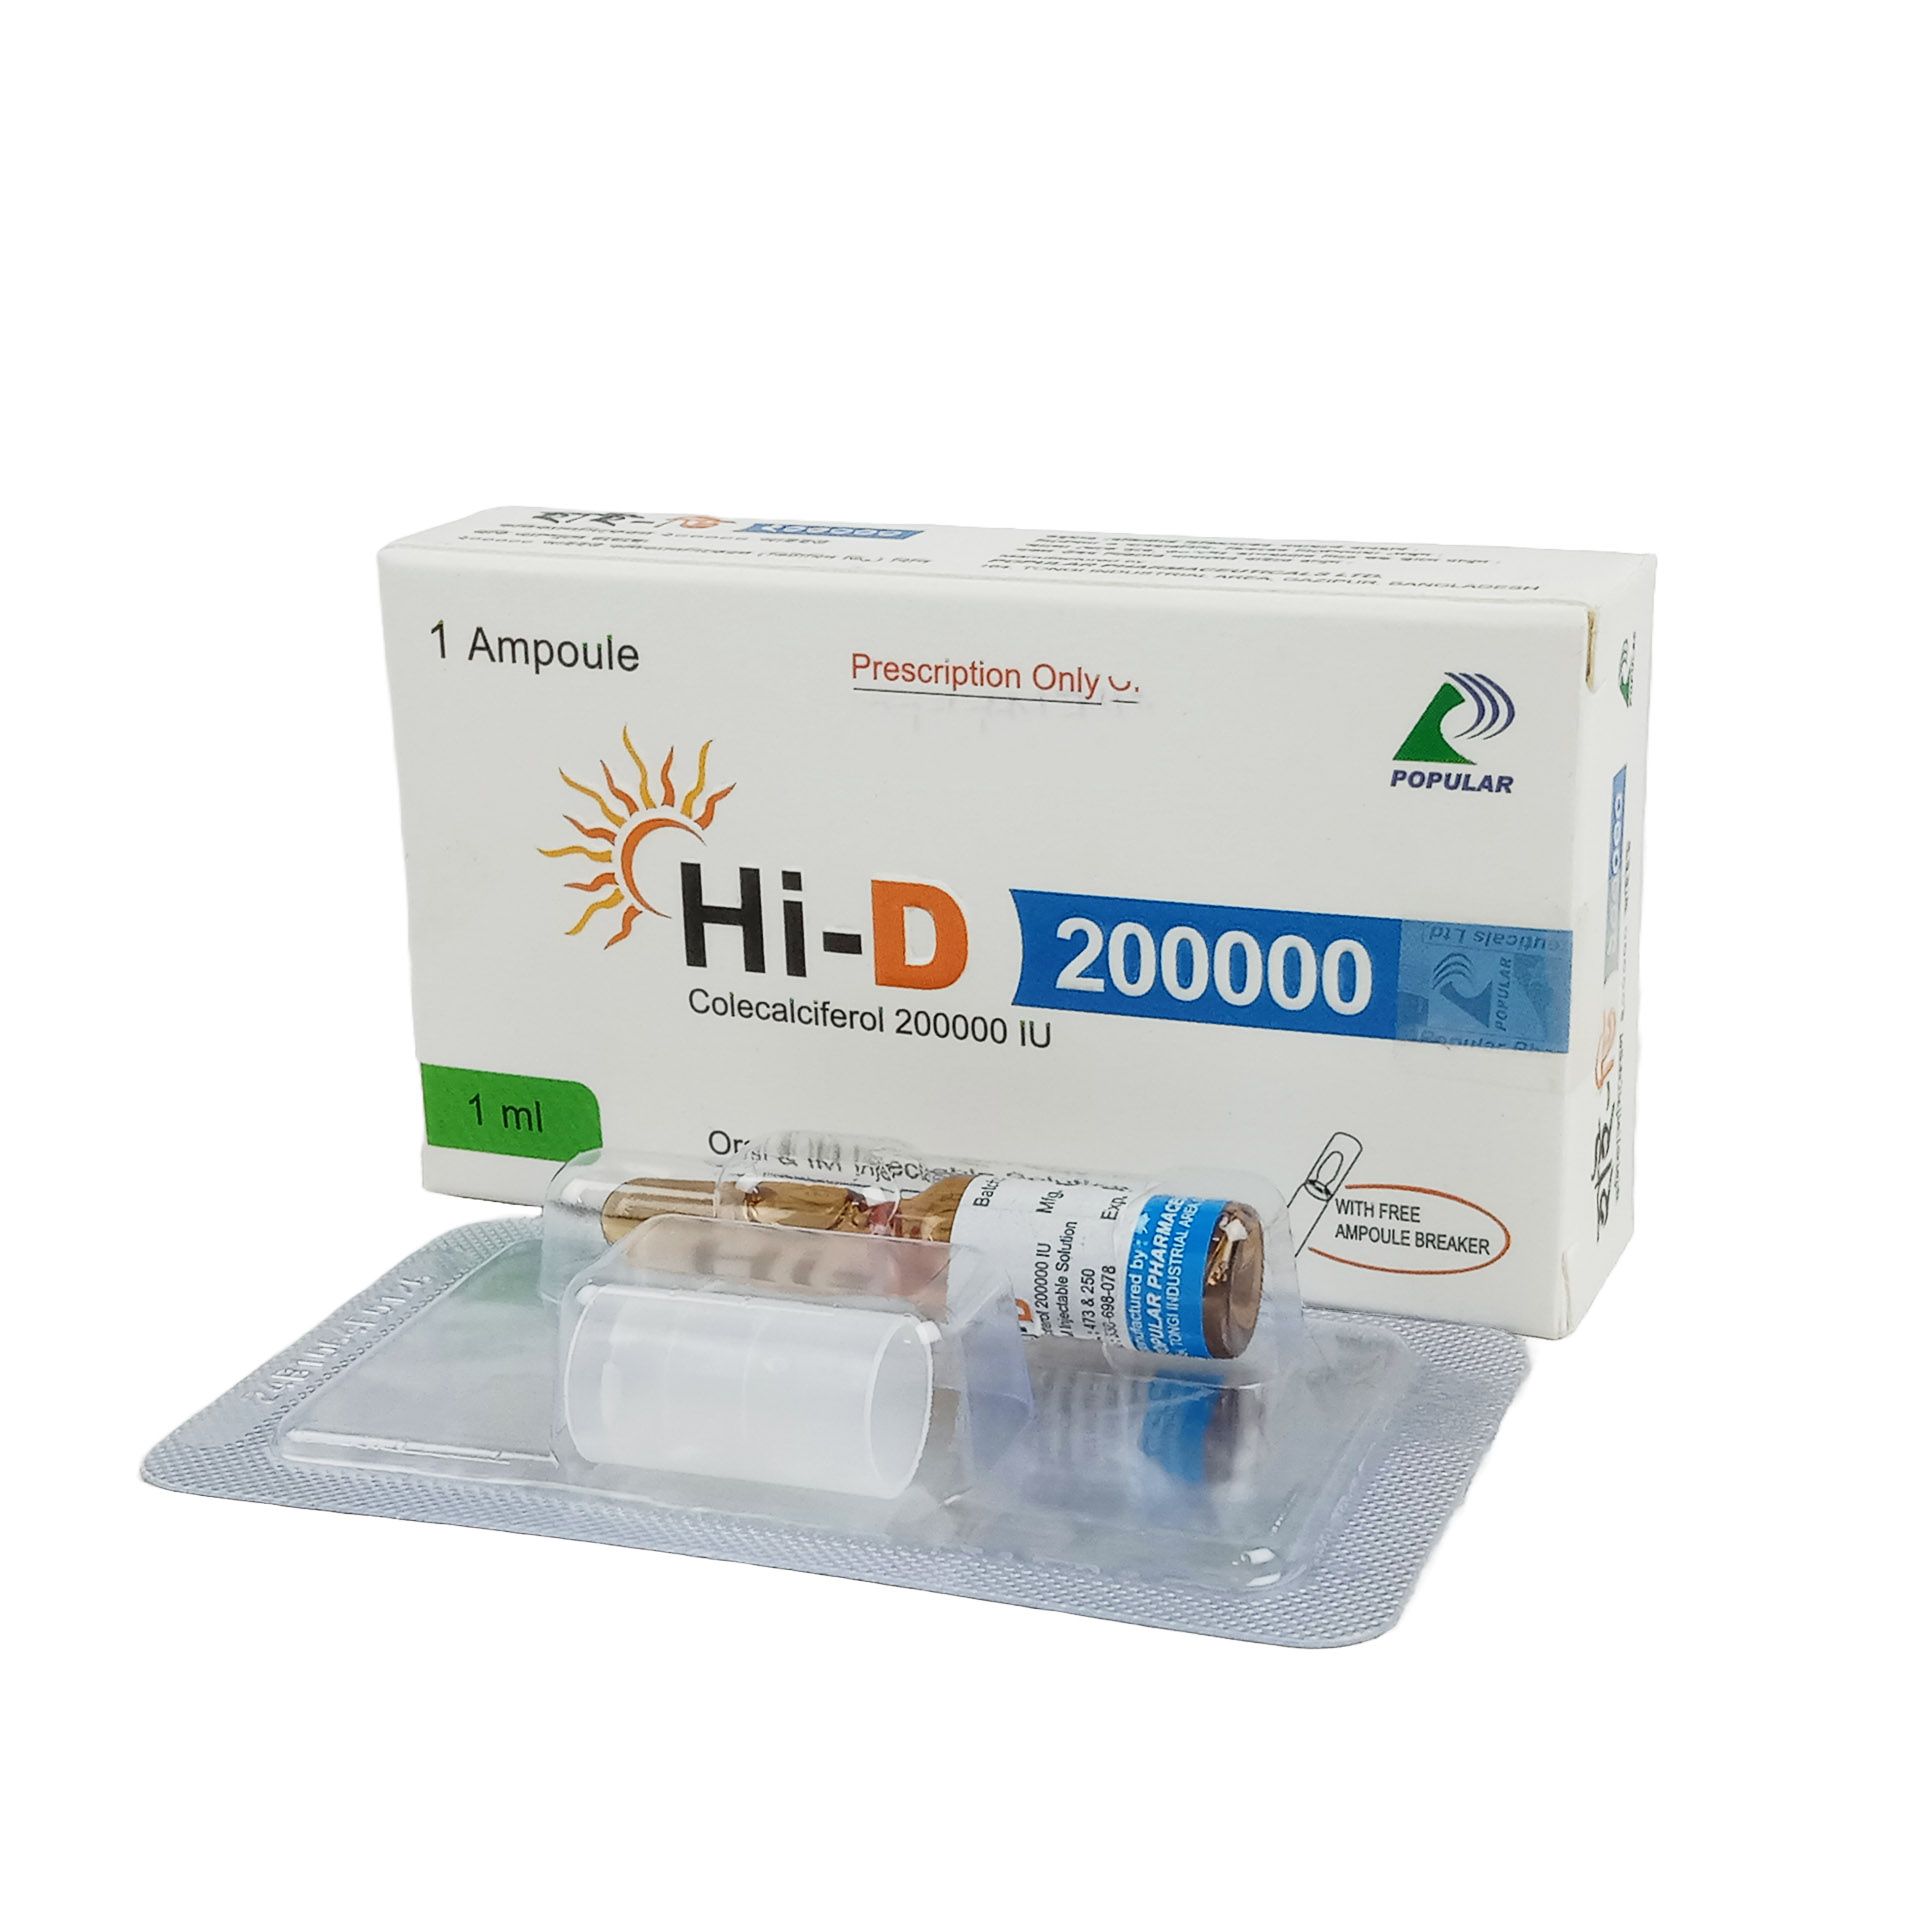 Hi-D 200000 5mg/ml Injection